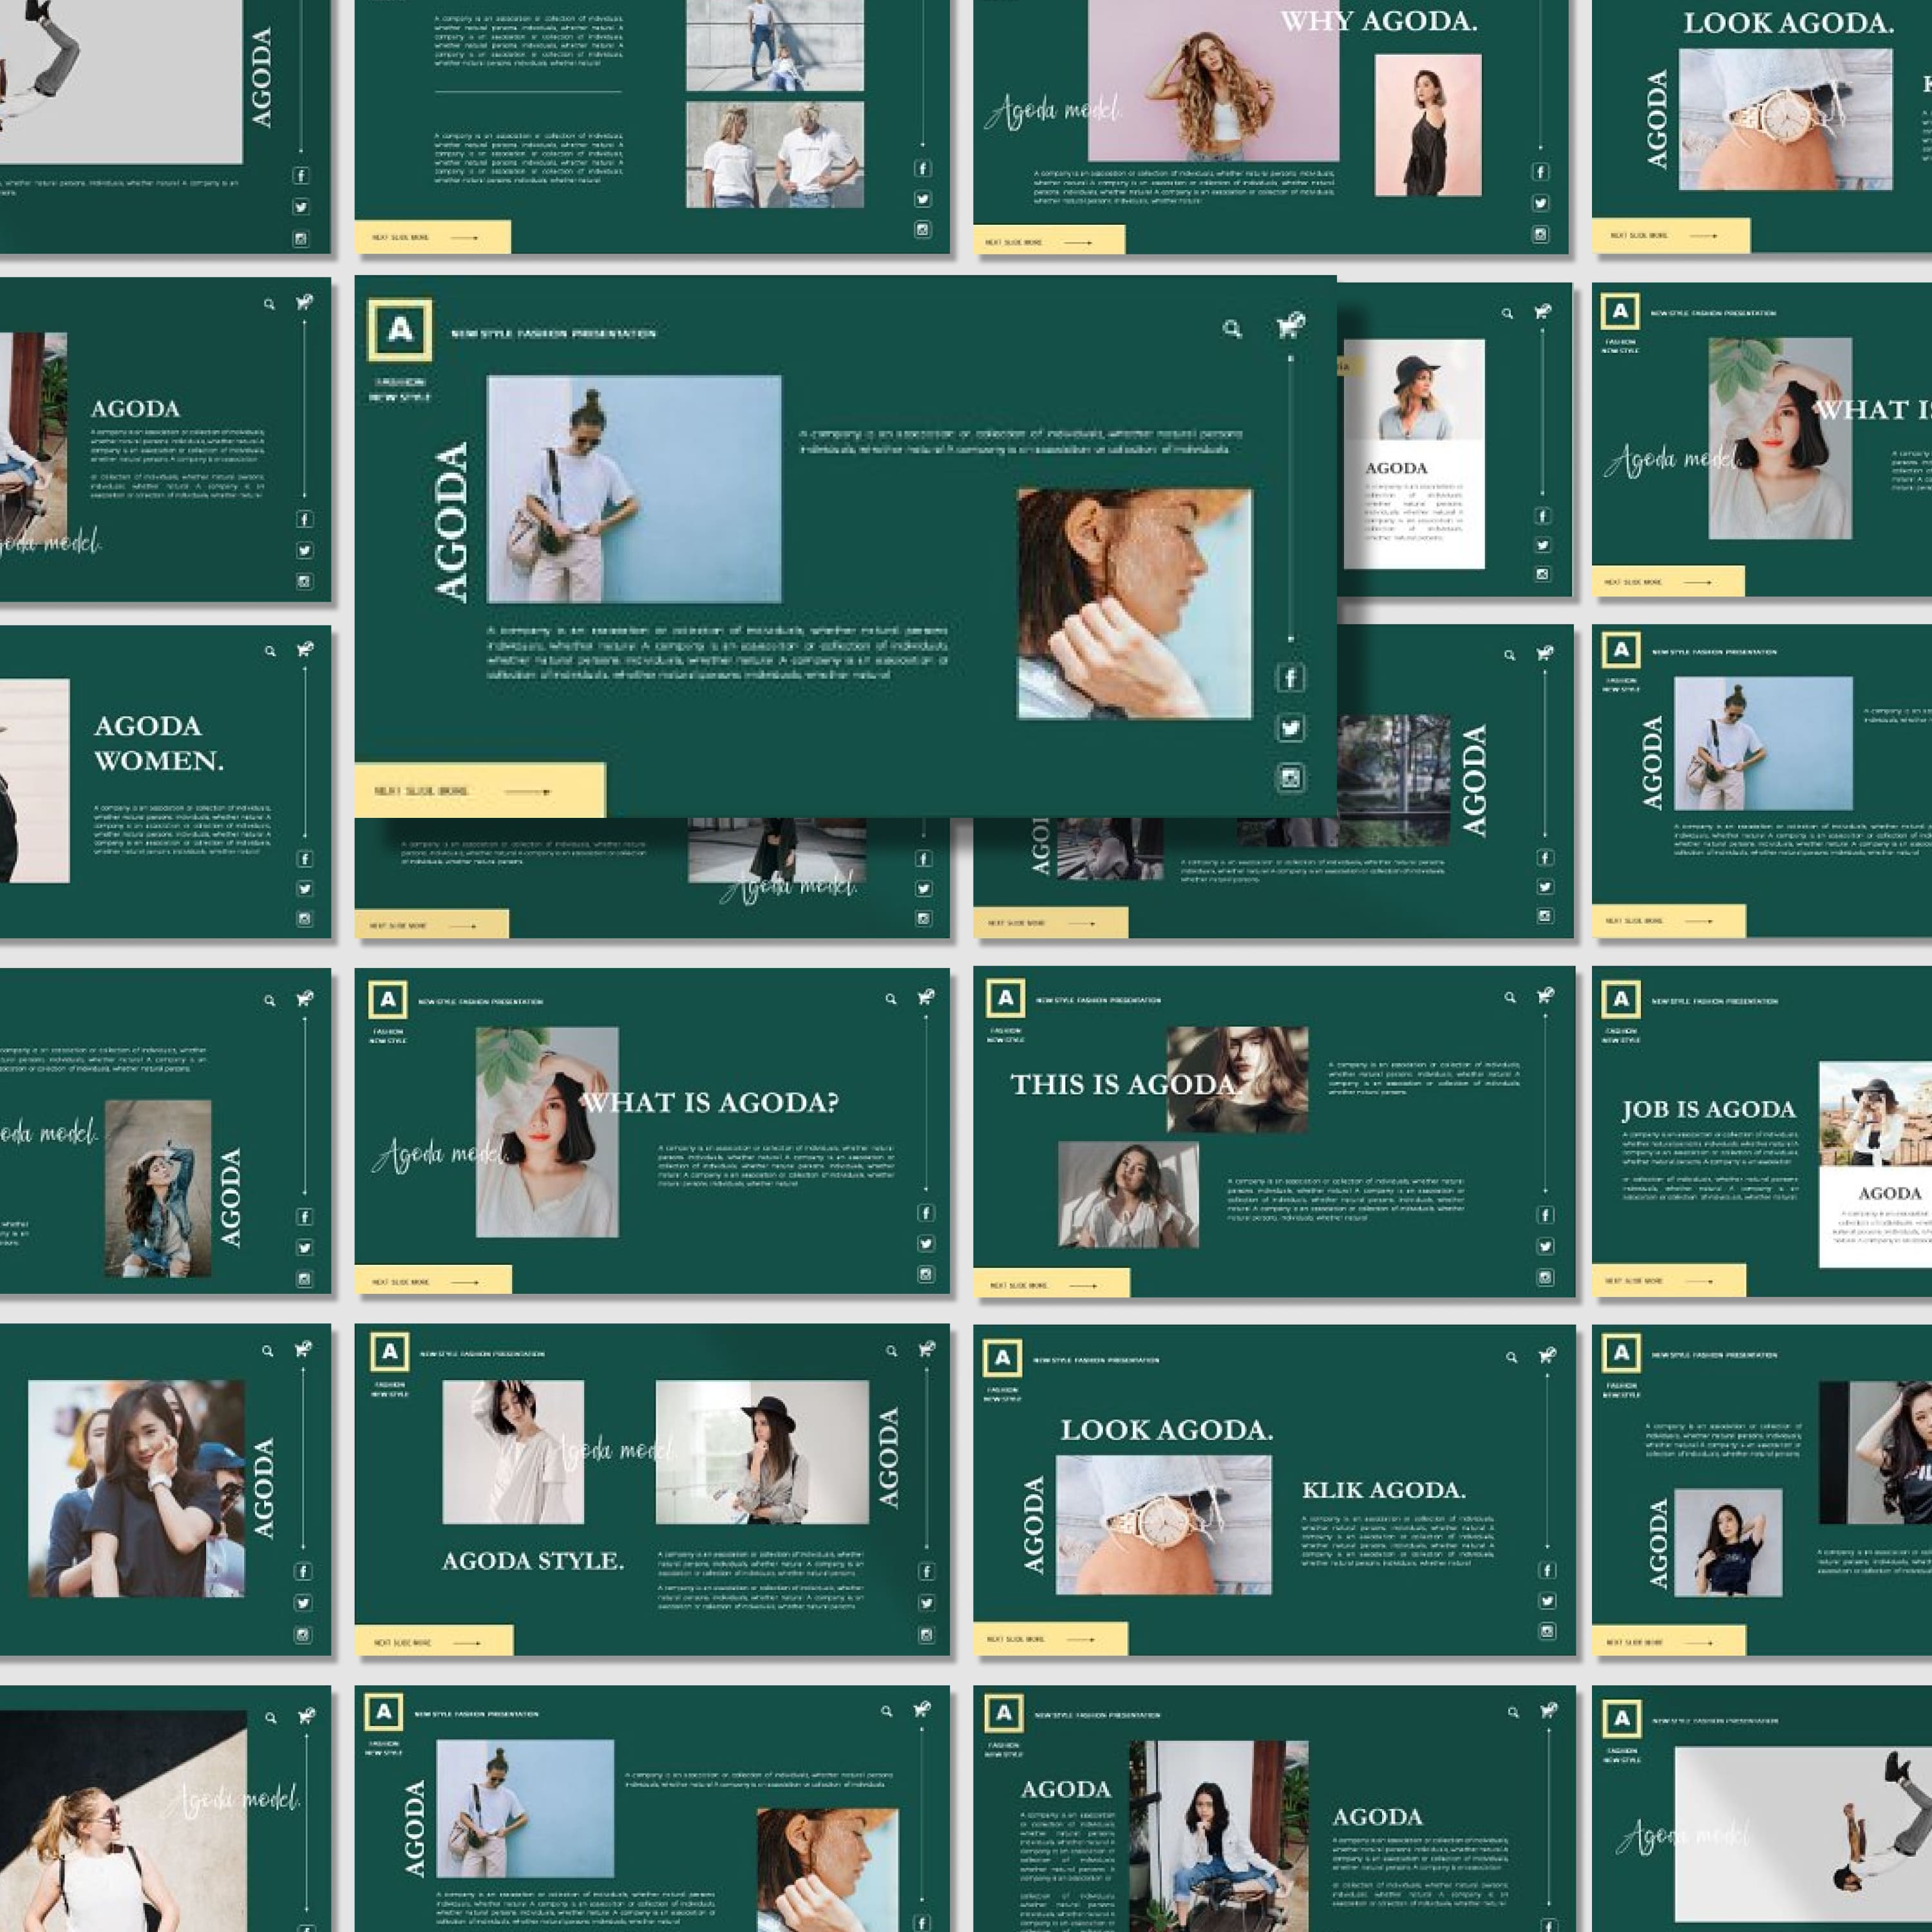 Agoda fashion google slide created by Barland Design.